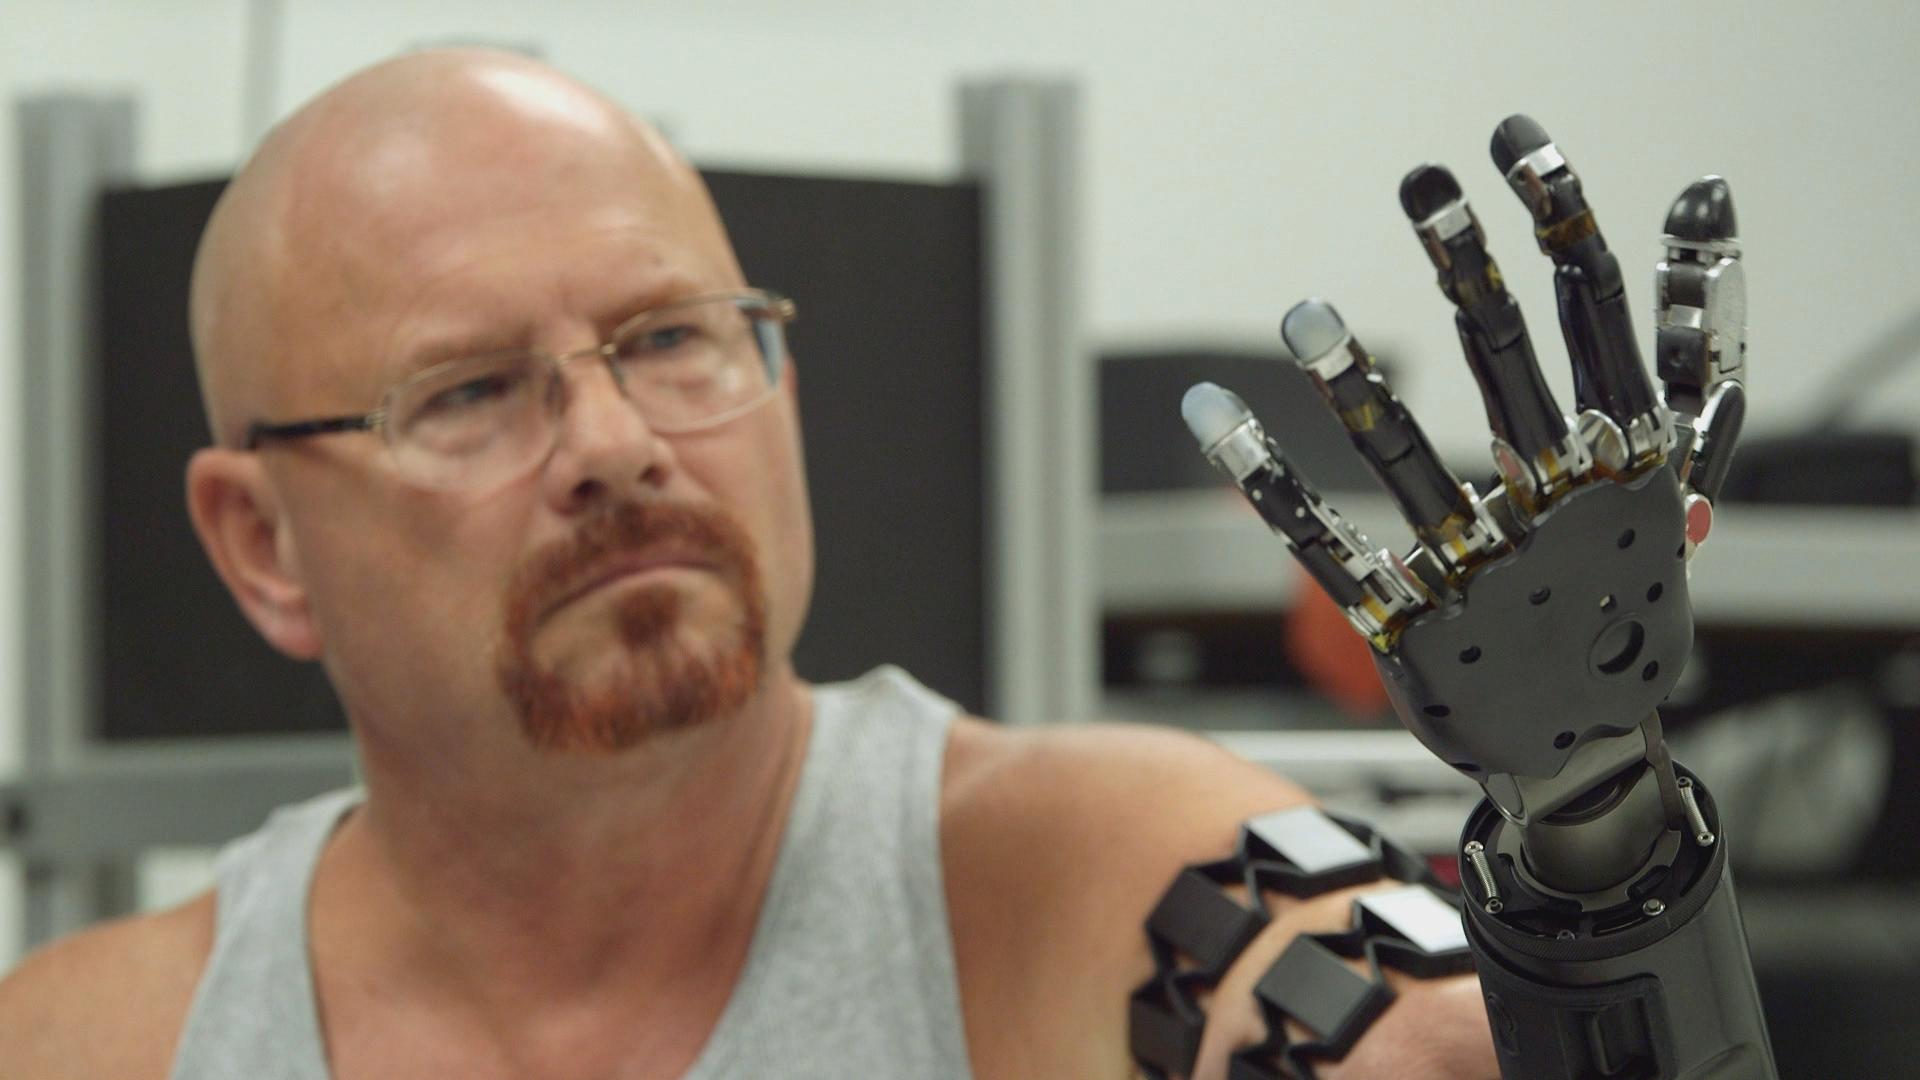 Johnny-Matheny_robotic-prosthetic-arm